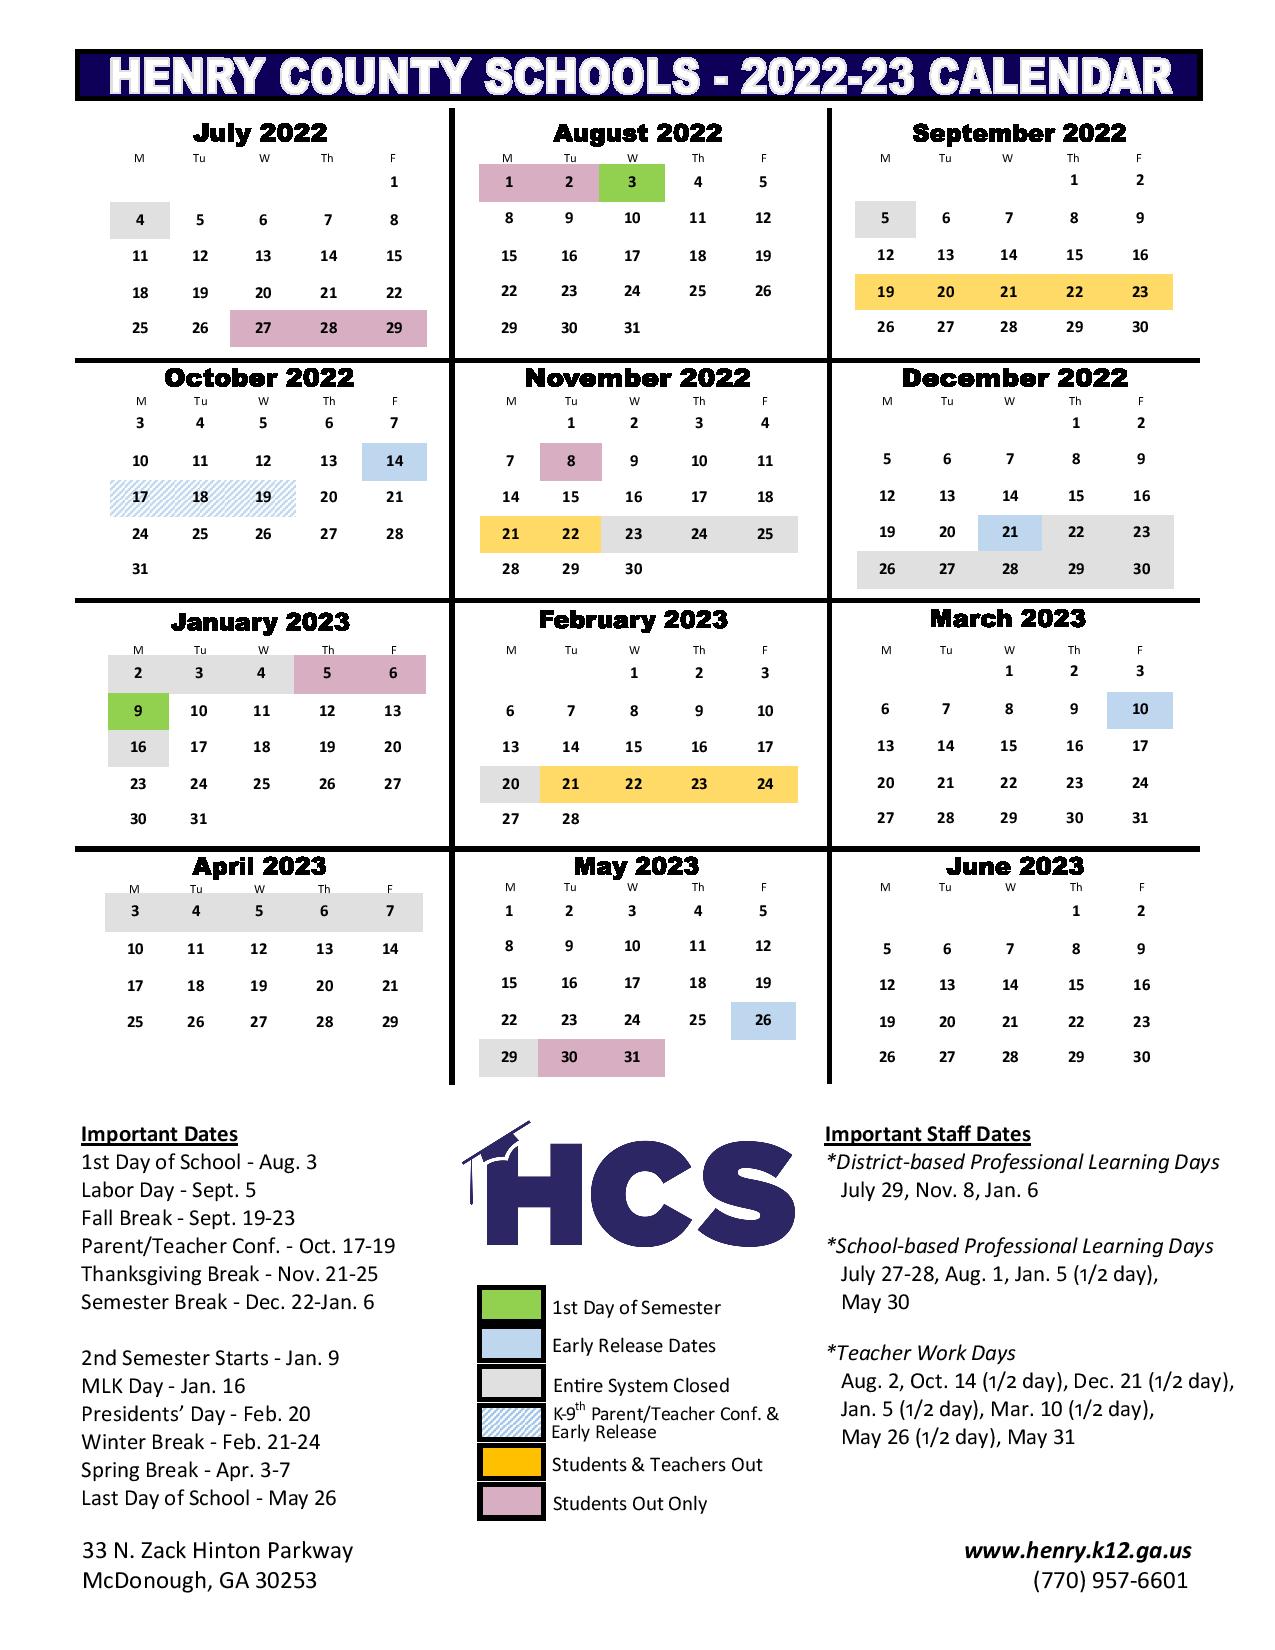 forsyth-county-schools-calendar-us-school-calendar